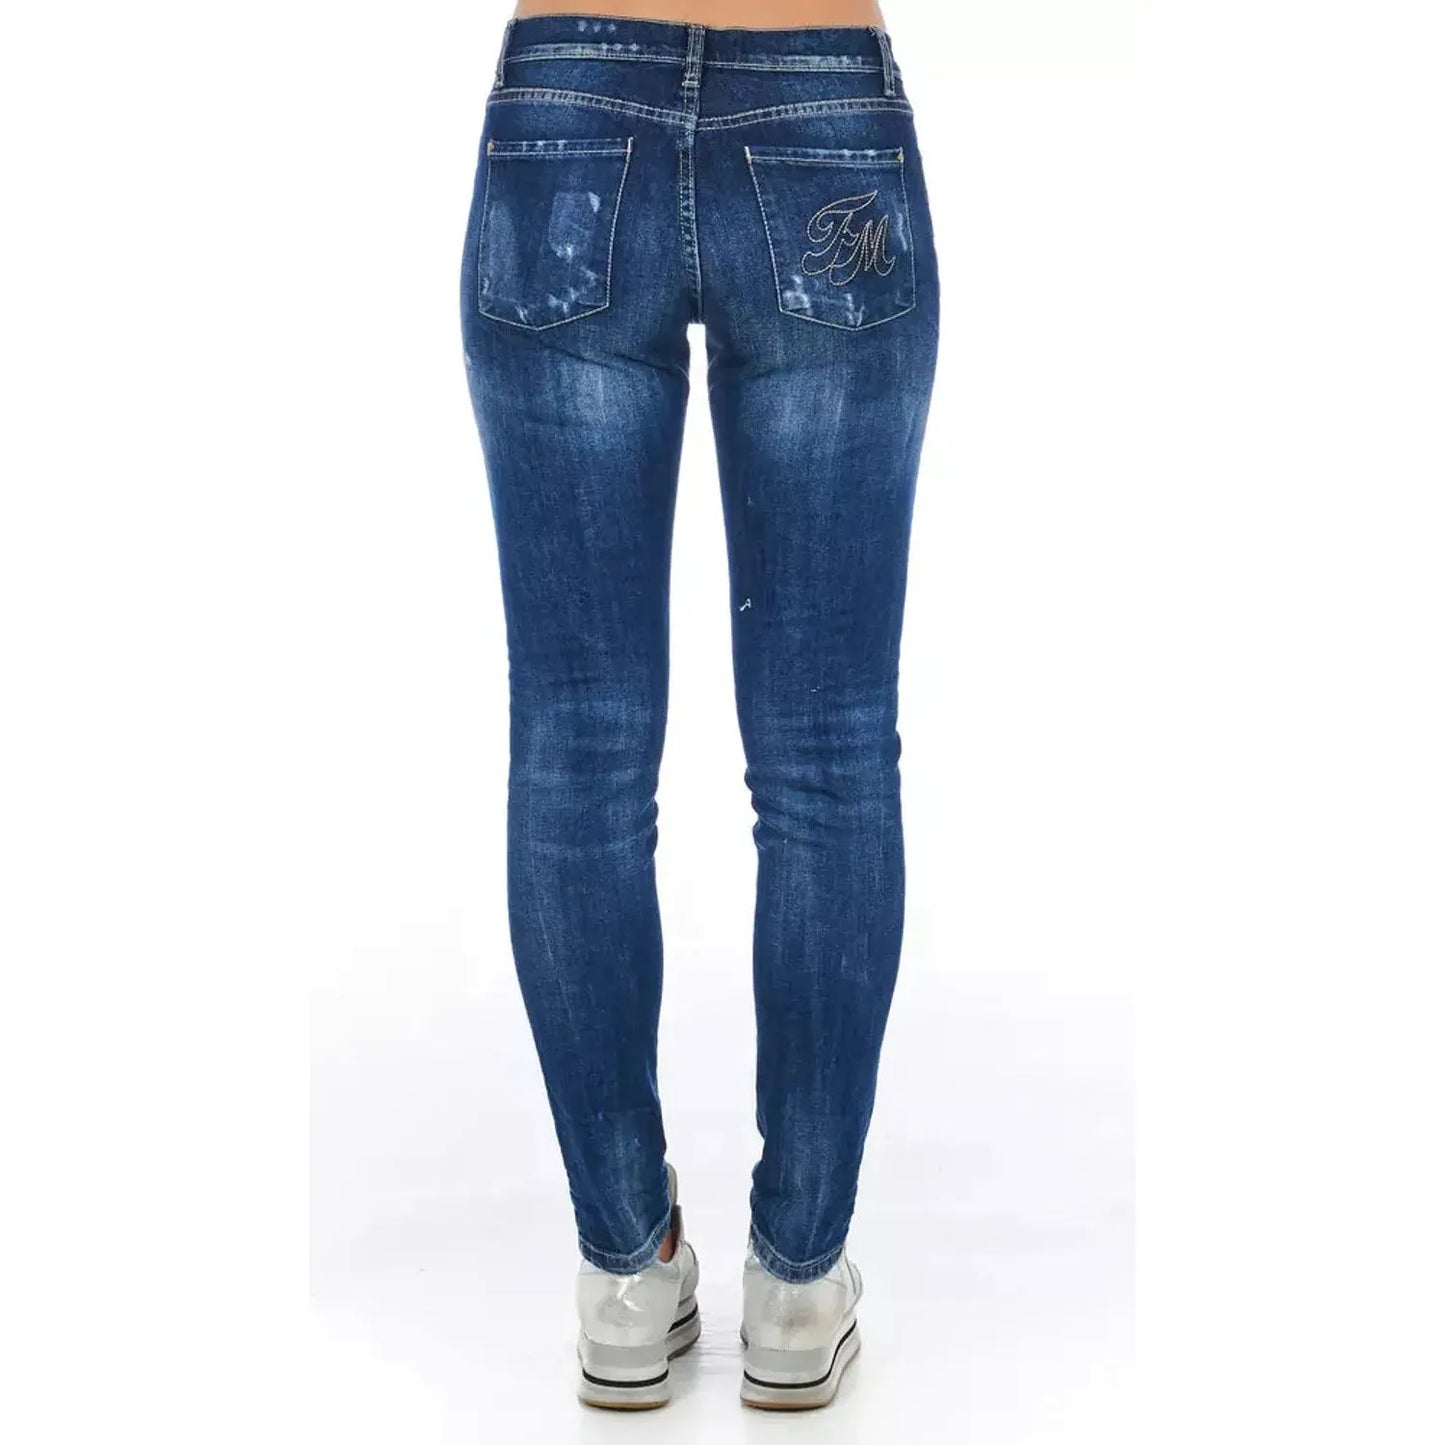 Frankie Morello Chic Worn Wash Skinny Denim Jeans blue-cotton-jeans-pant-52 product-21764-1548607872-20-42df7fbf-b4e.webp